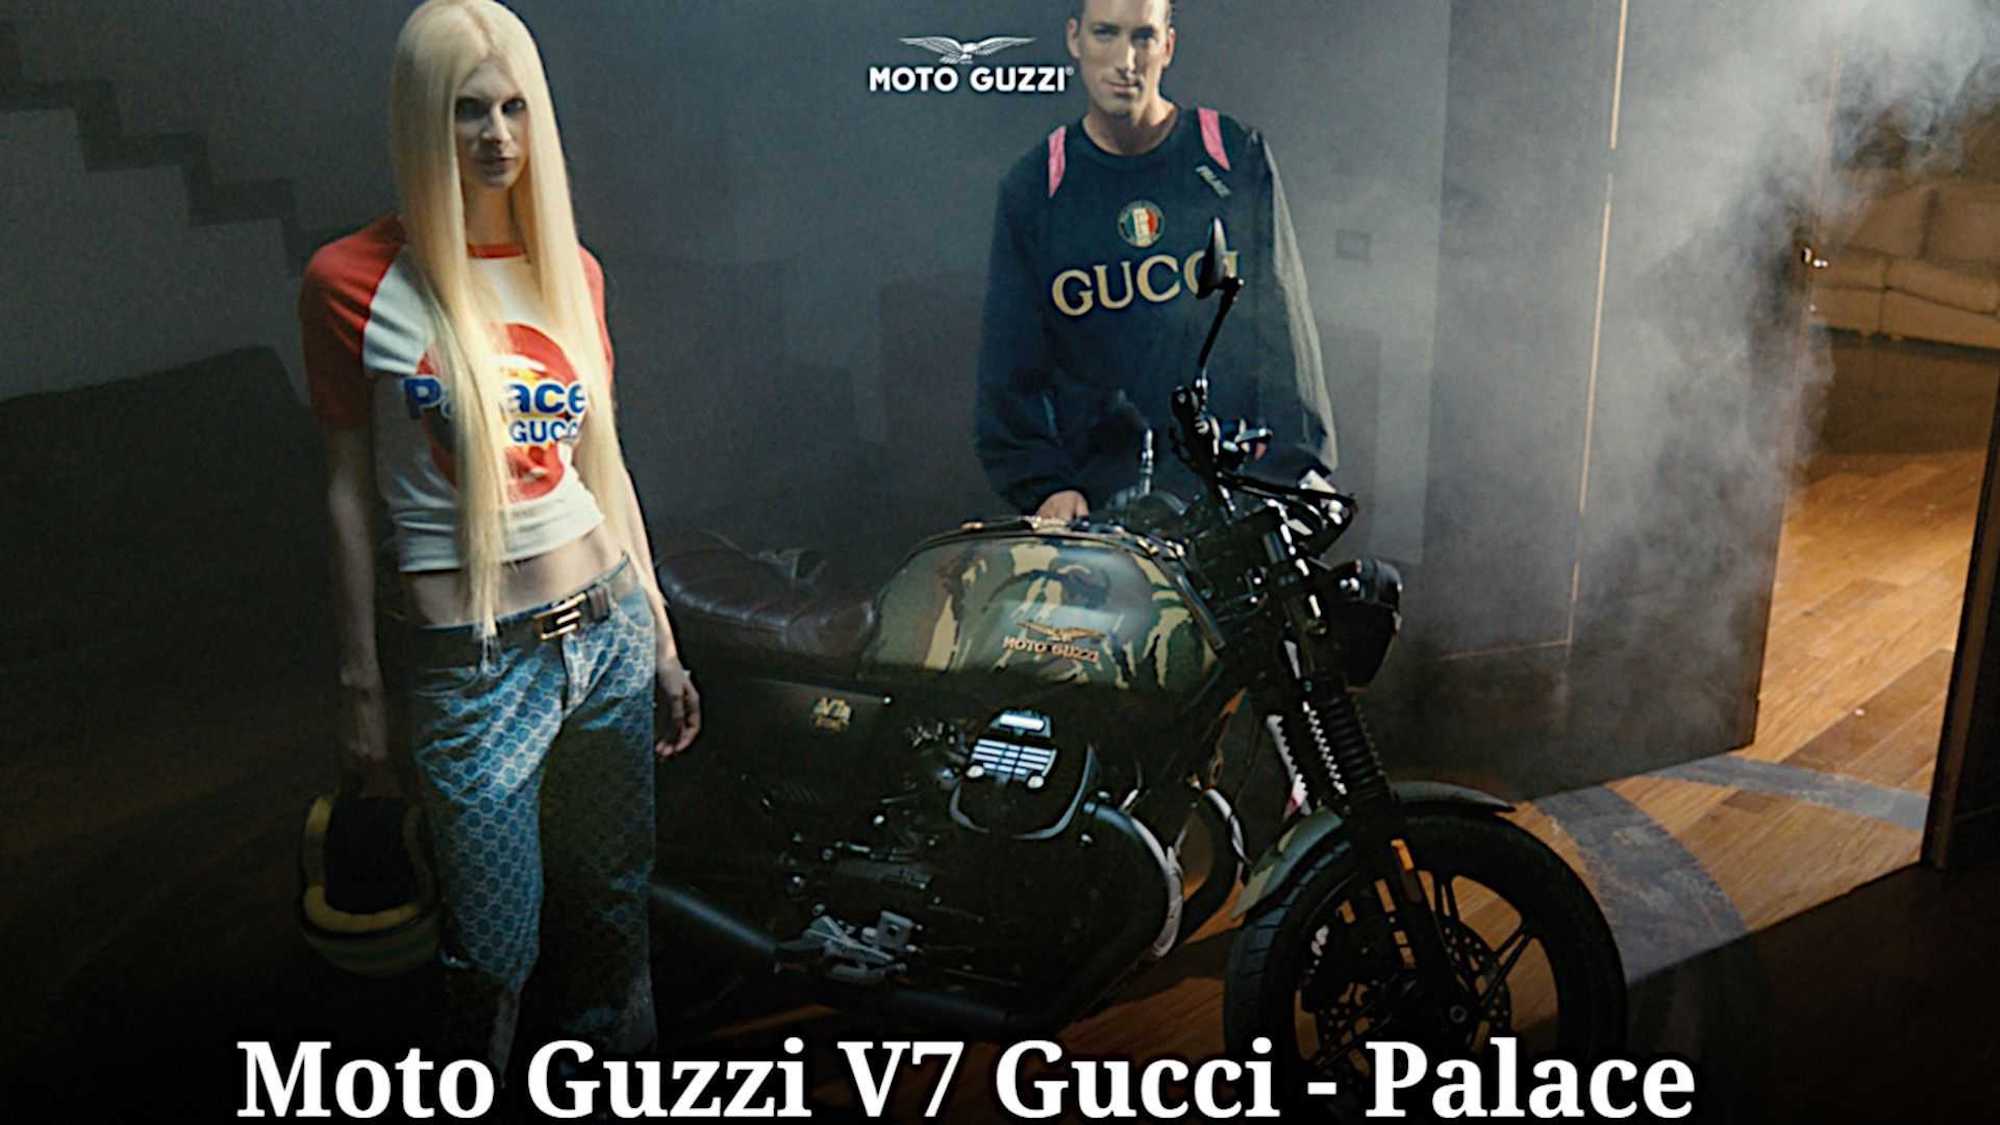 Palace Gucci Moto Guzzi V7石材限量版，与Gucci和Palace Skateboards合作打造。那位女士看起来不是特别高兴，但我们认为当她穿上一些好装备上路时，她就会咧嘴笑了。媒体来源自RideApart。